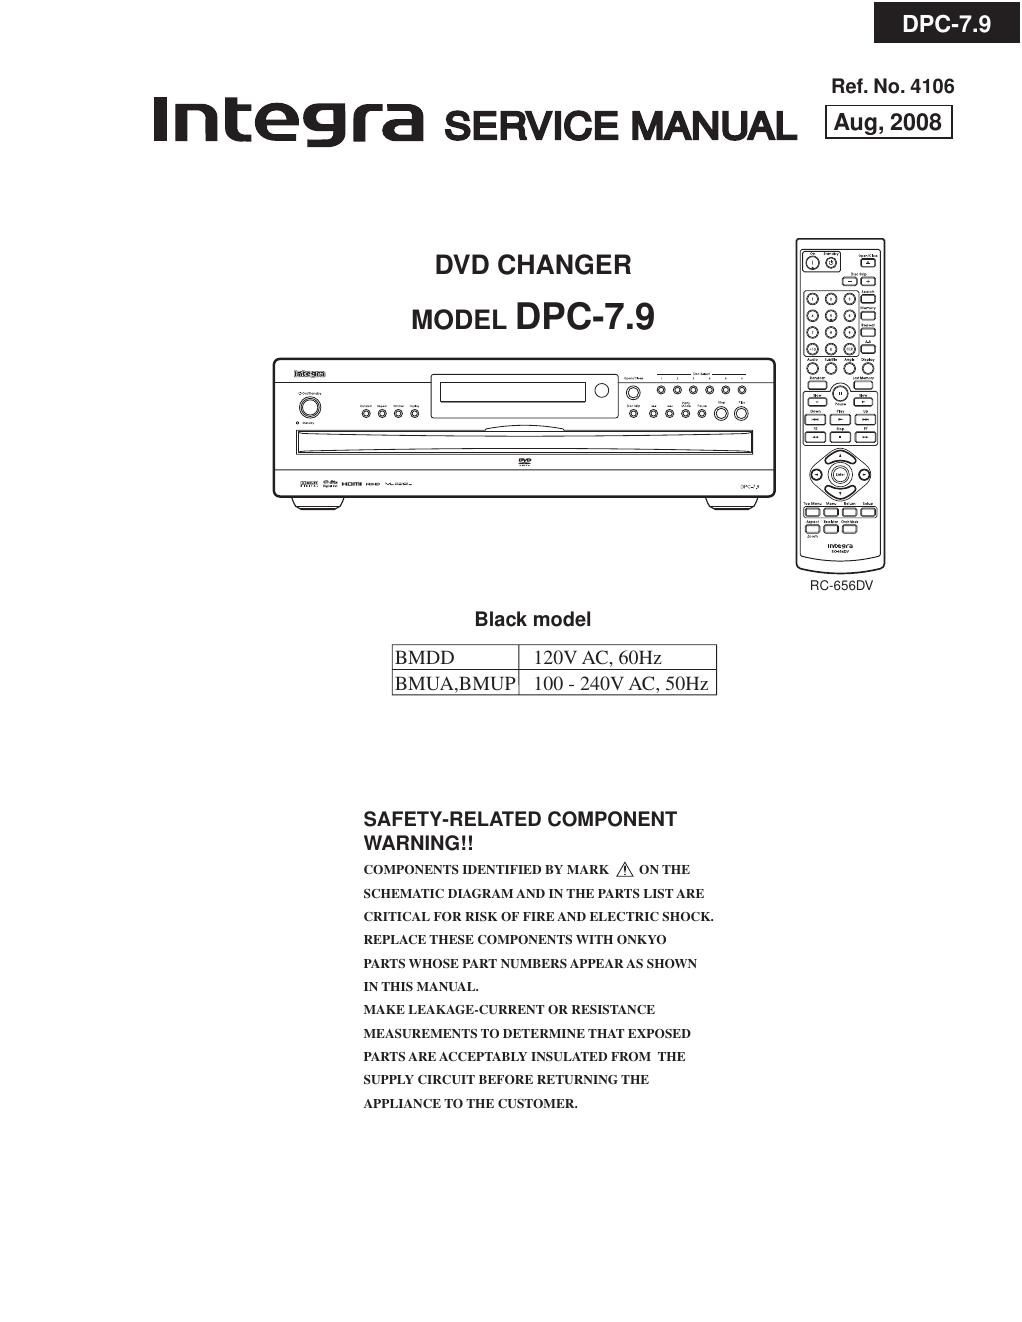 integra dpc 7 9 service manual